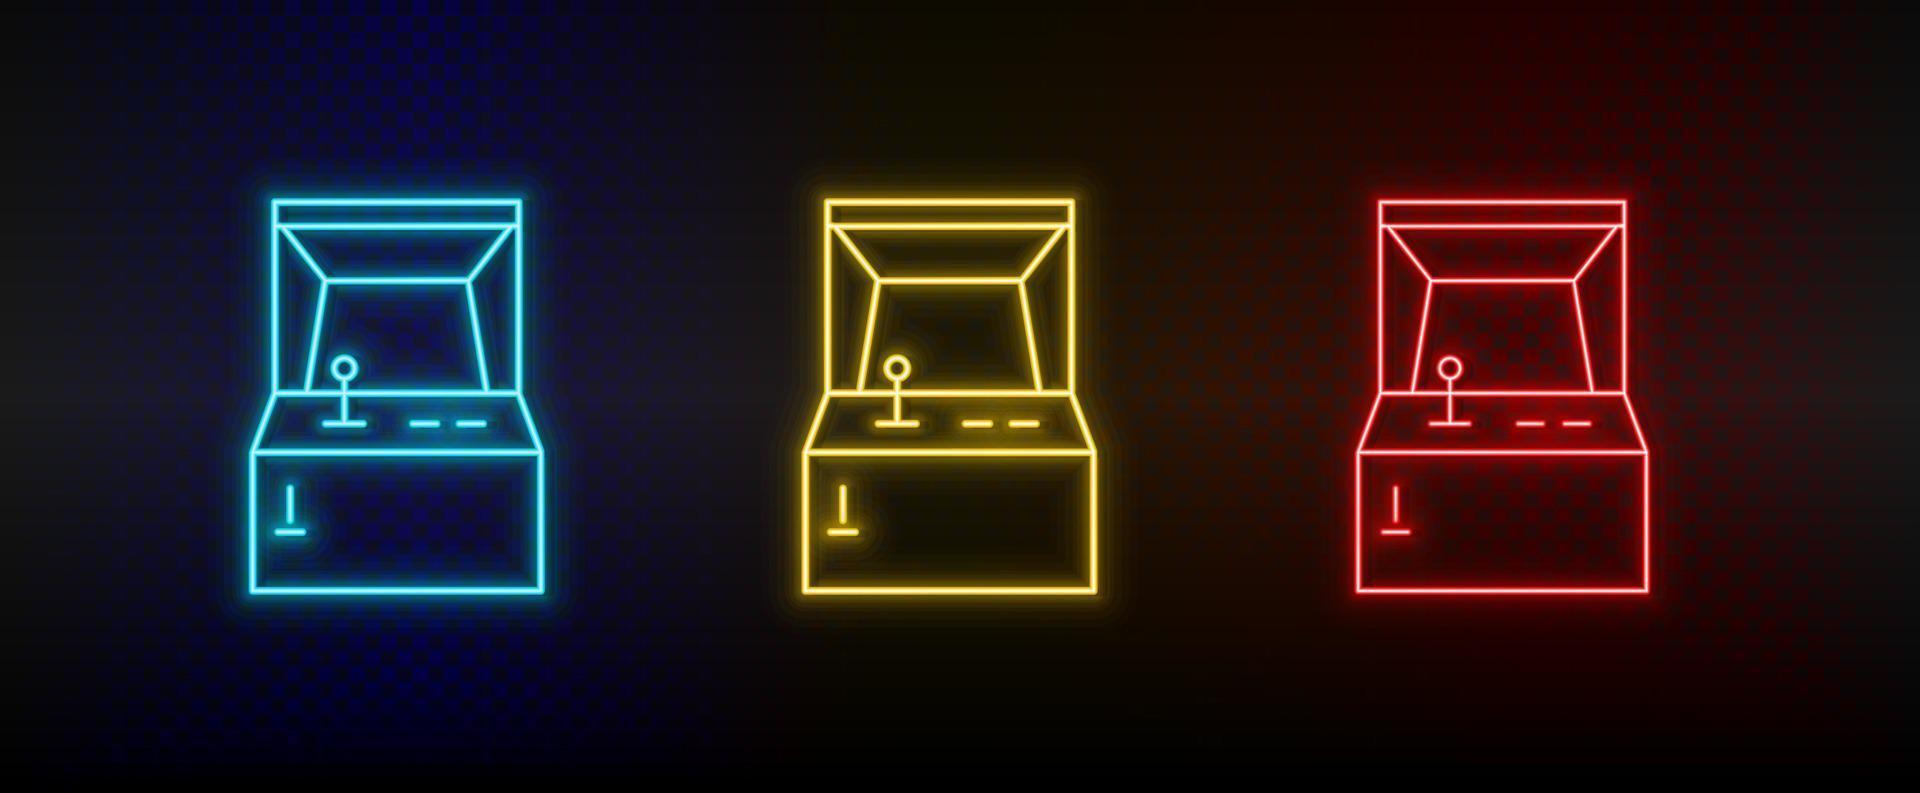 iconos de neón. consola de juegos retro arcade. conjunto de icono de vector de neón rojo, azul, amarillo sobre fondo oscuro